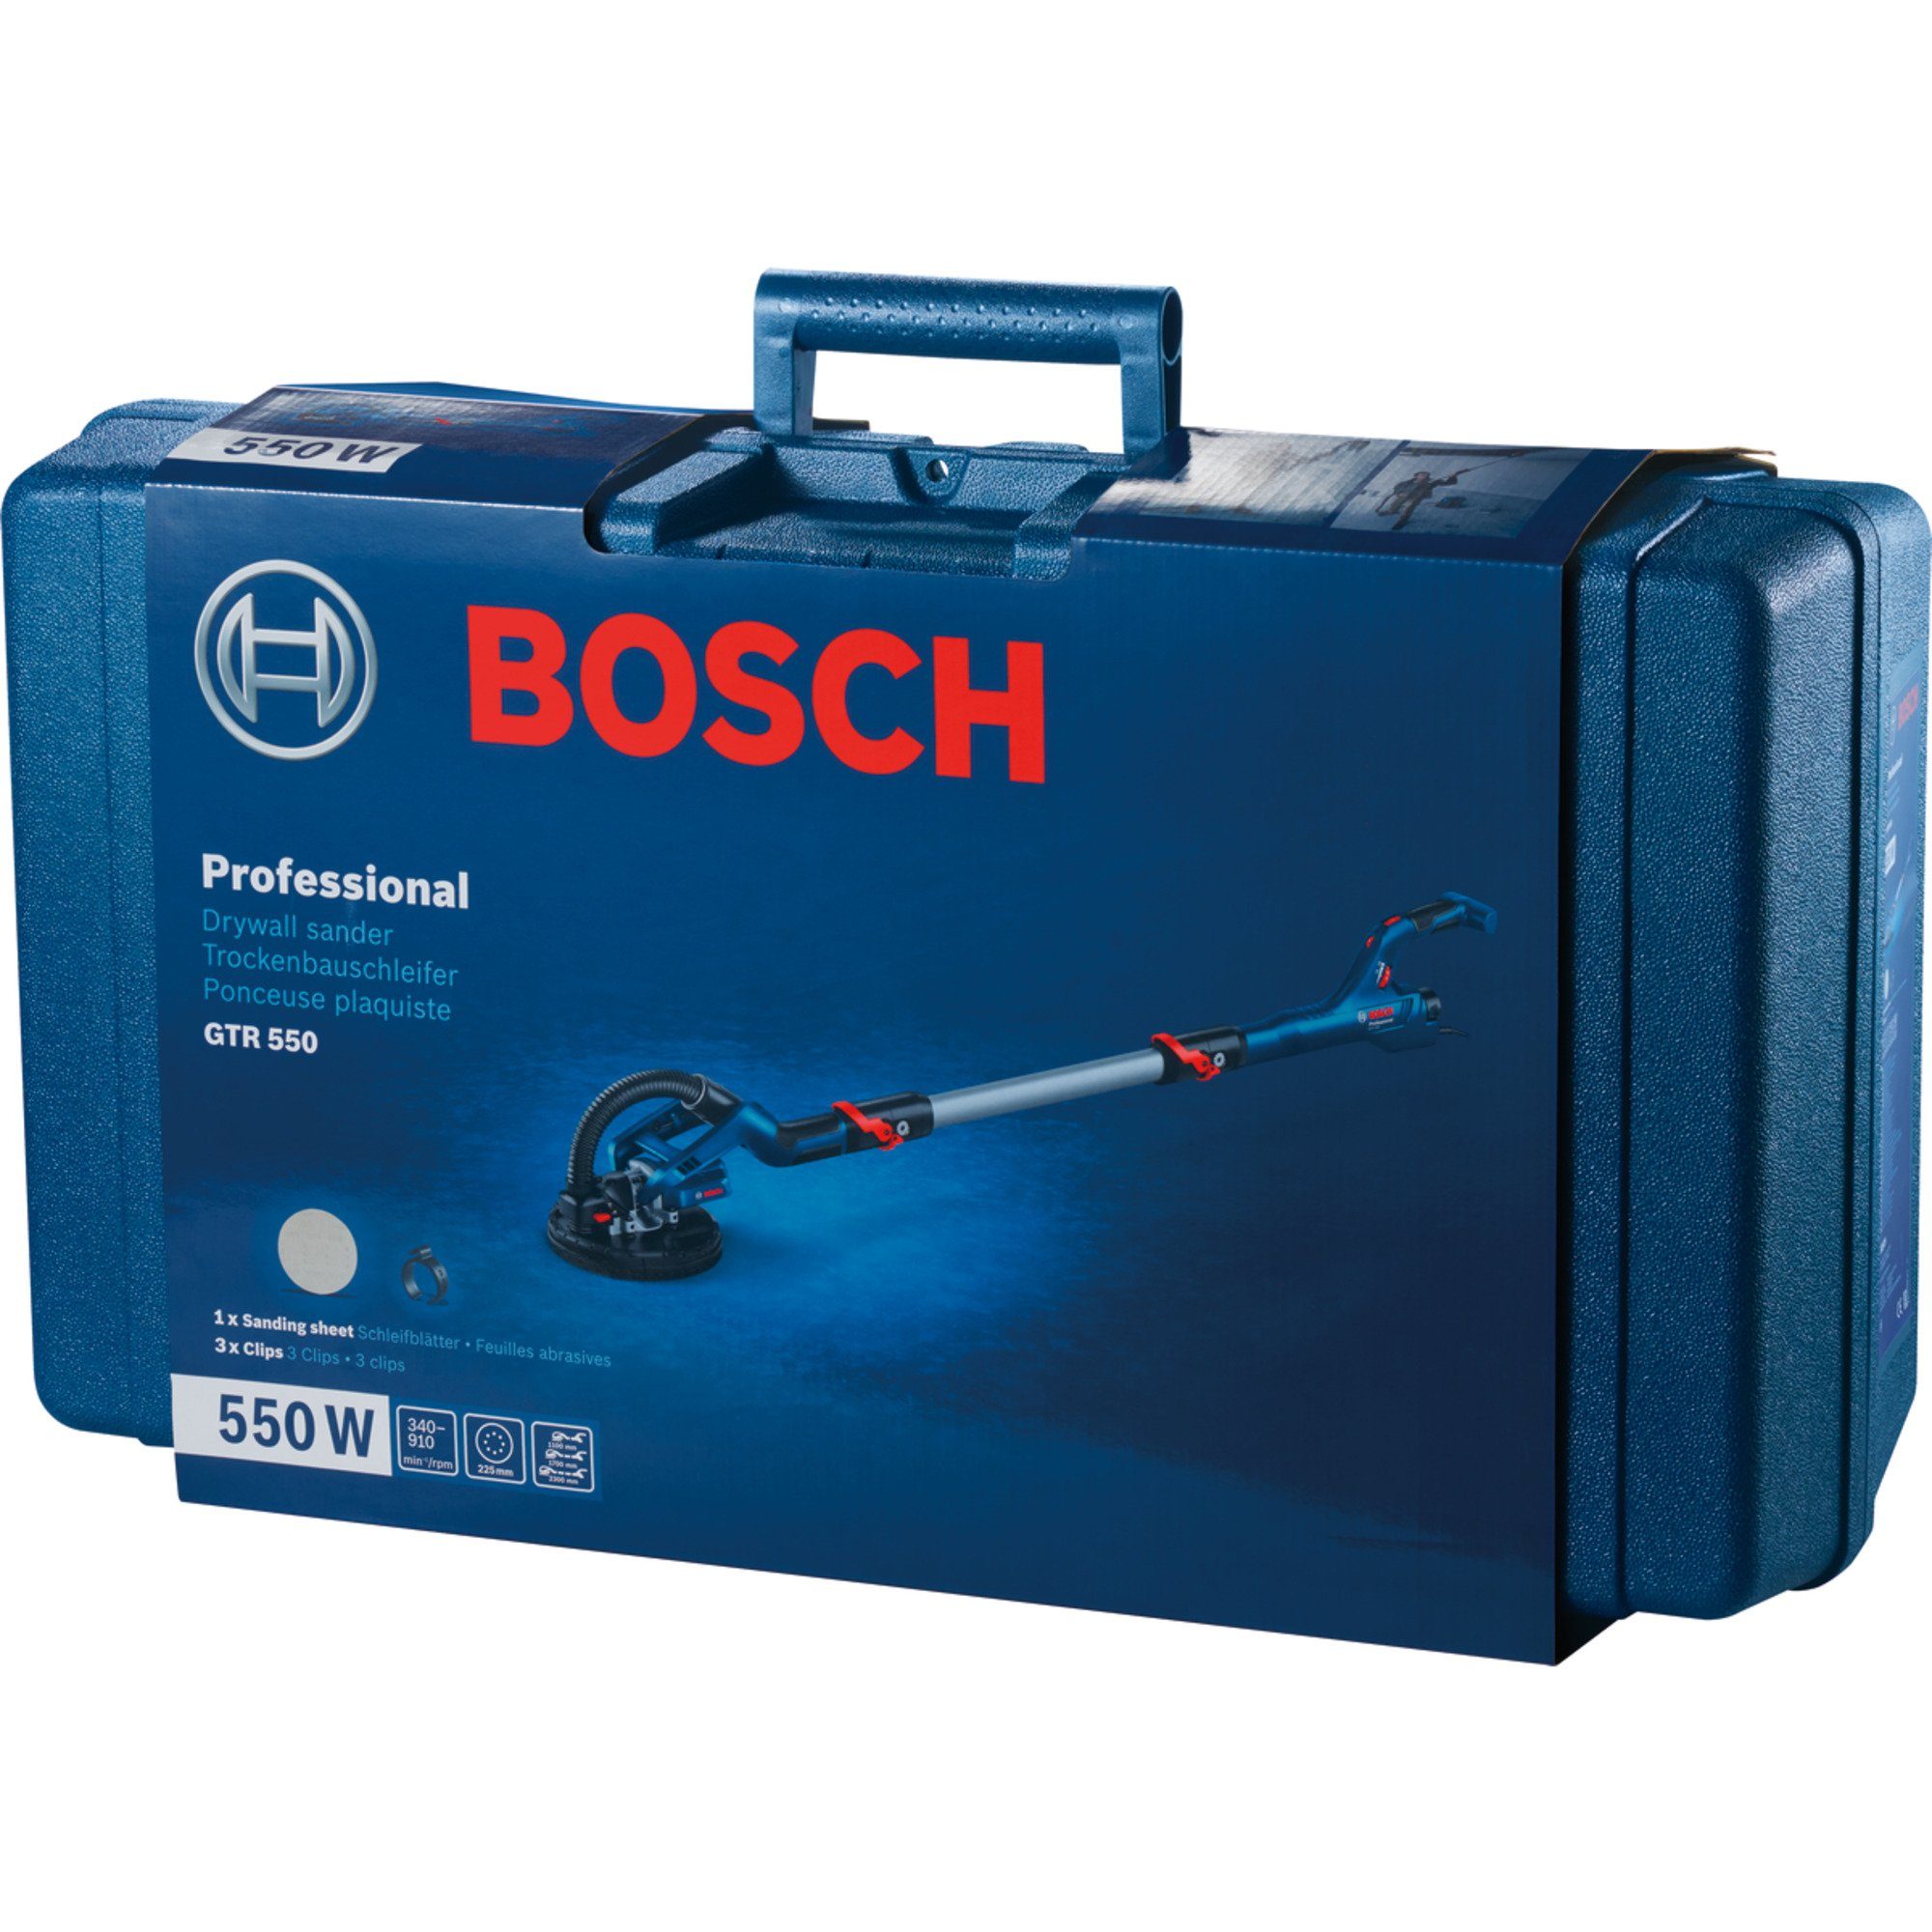 Bosch Multischleifer 55-225 Professional GTR BOSCH Trockenbauschleifer